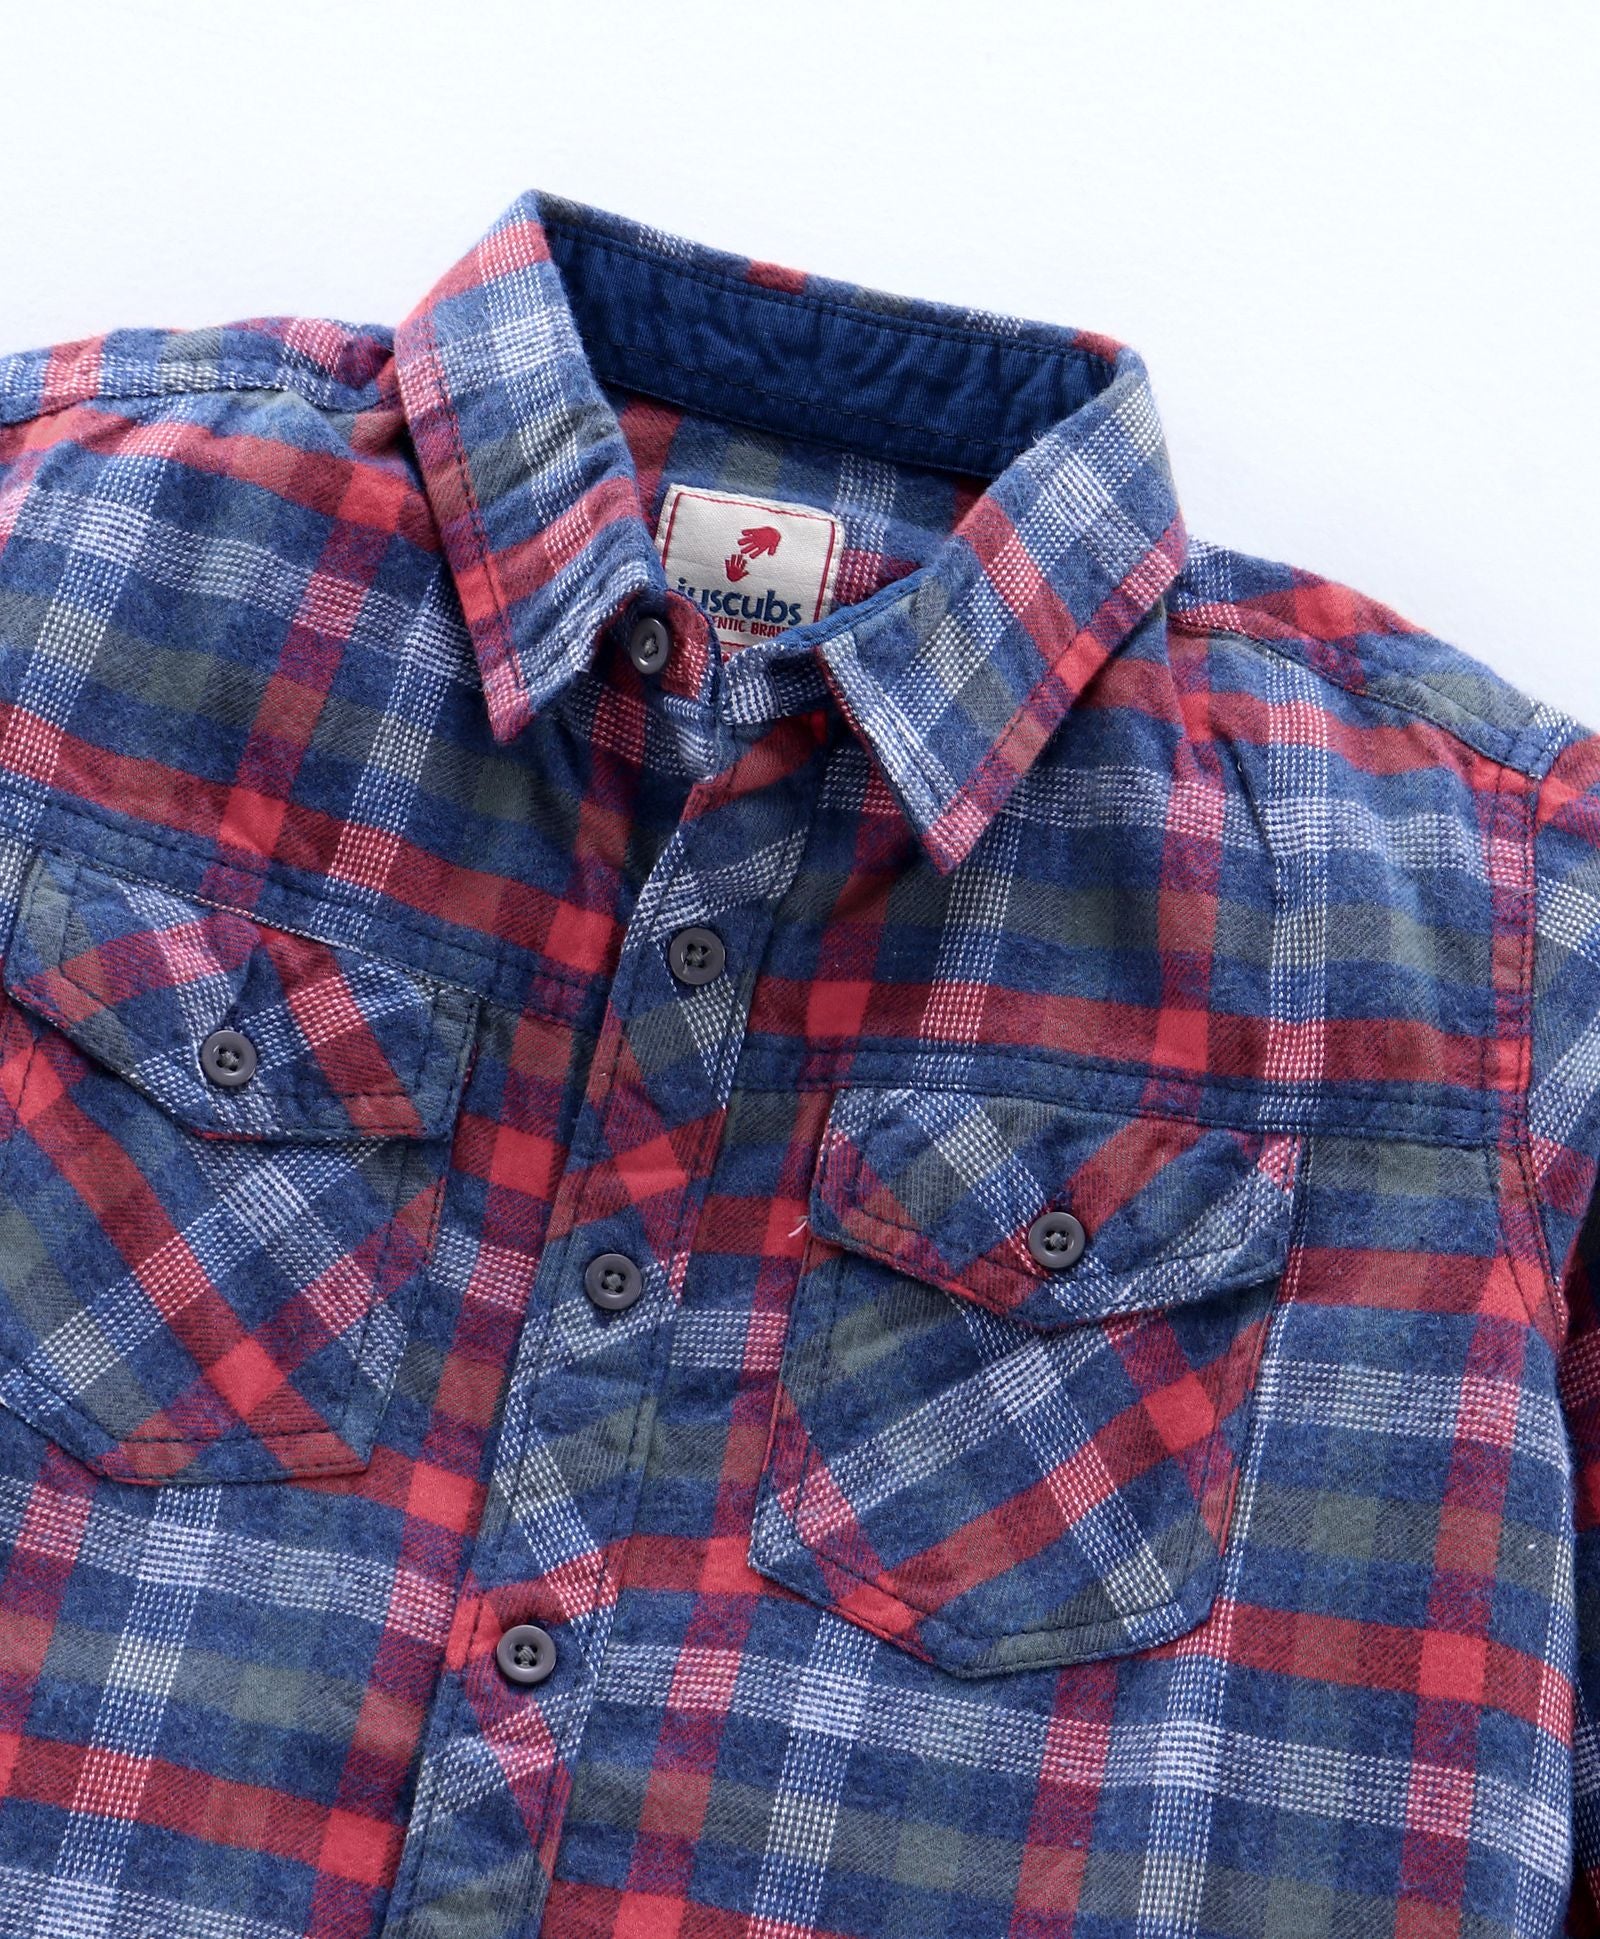 Full Sleeve Checkered Bio Wash Shirt - Blue & Red